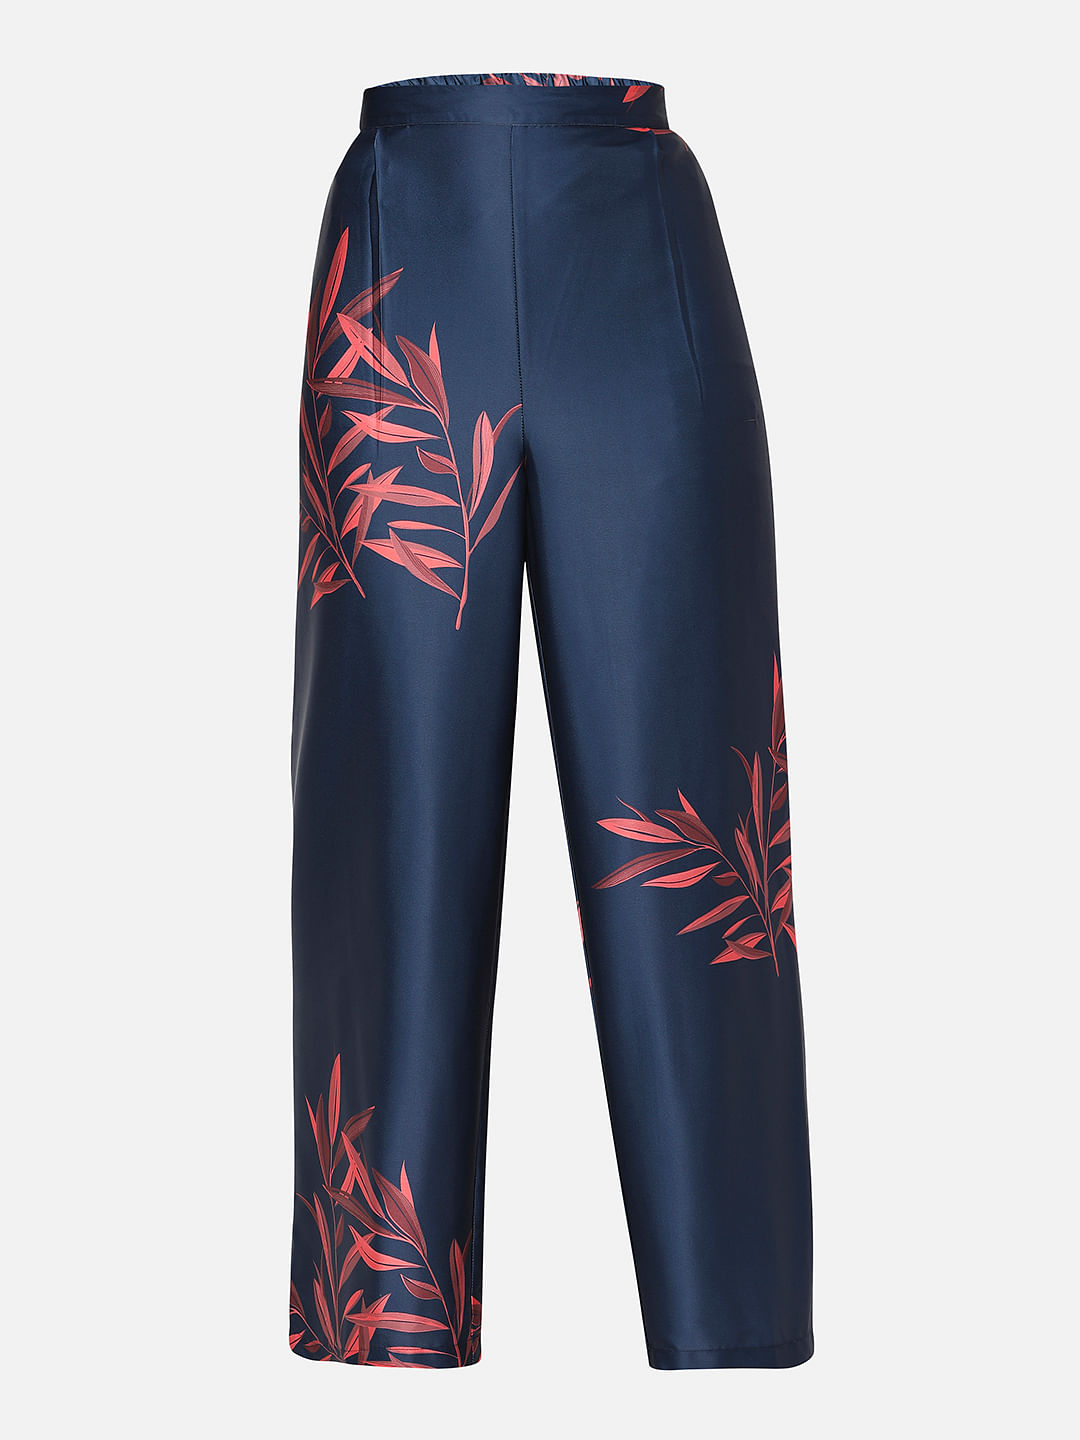 Zara Jungle Floral Pants #CNY888 #PRECNY60, Men's Fashion, Bottoms, Shorts  on Carousell